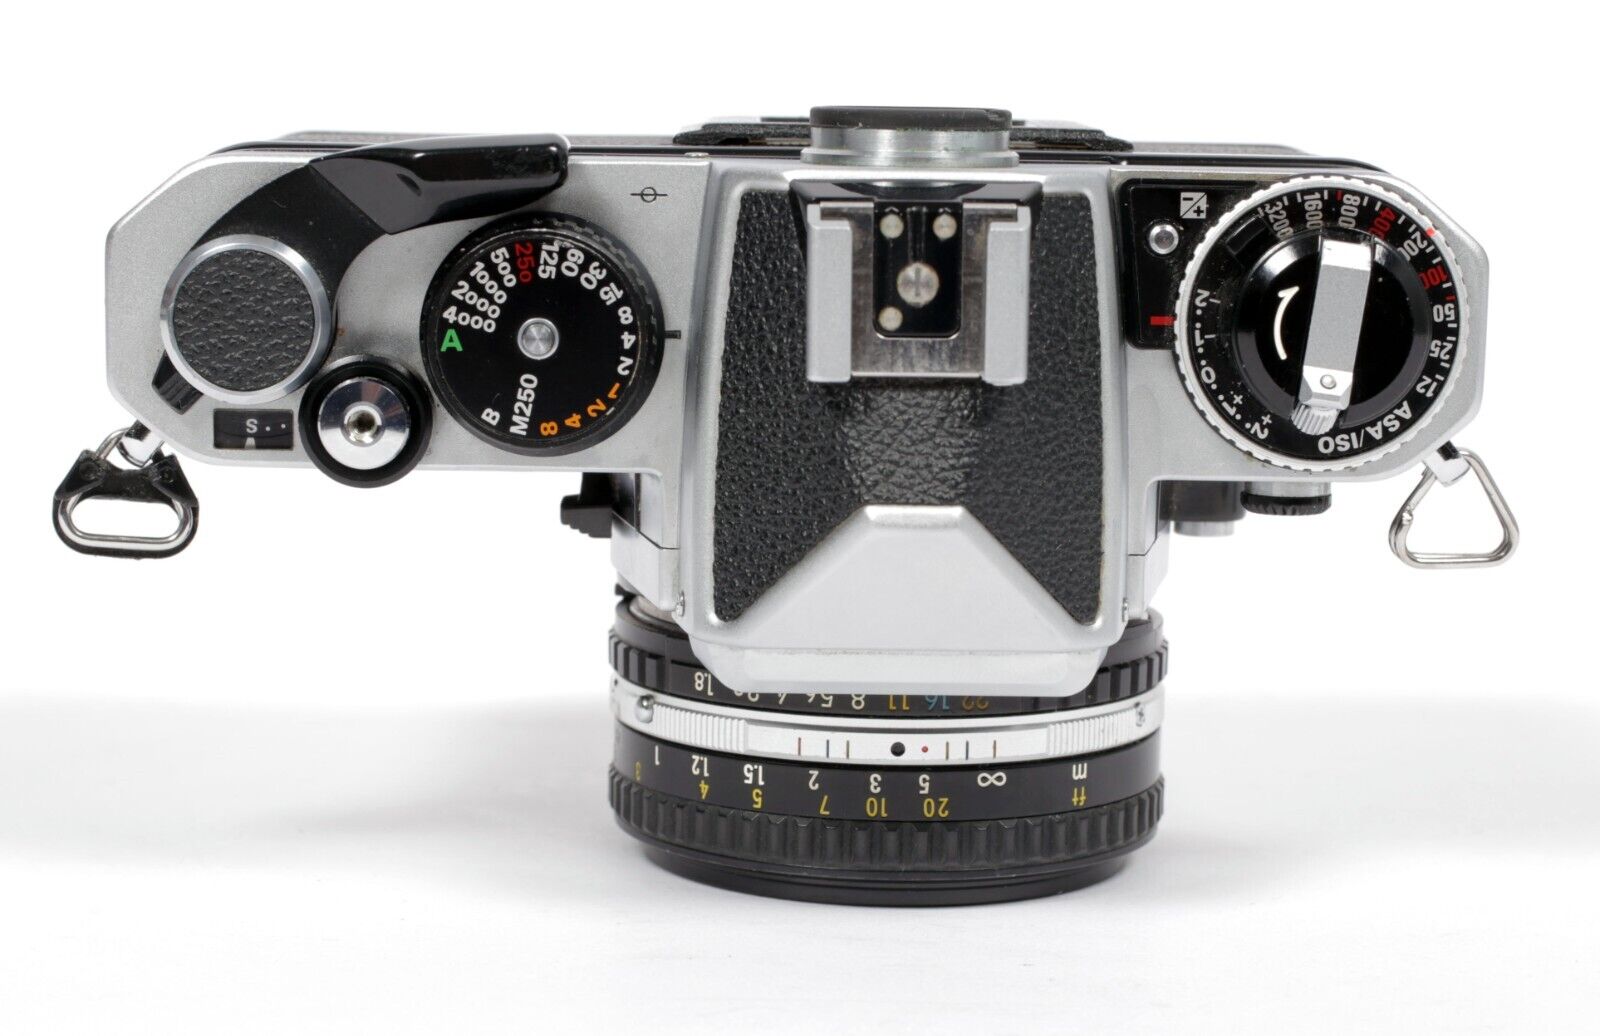 Nikon FE2 35mm SLR Film Camera with 50mm F1.8 lens #914 | CatLABS